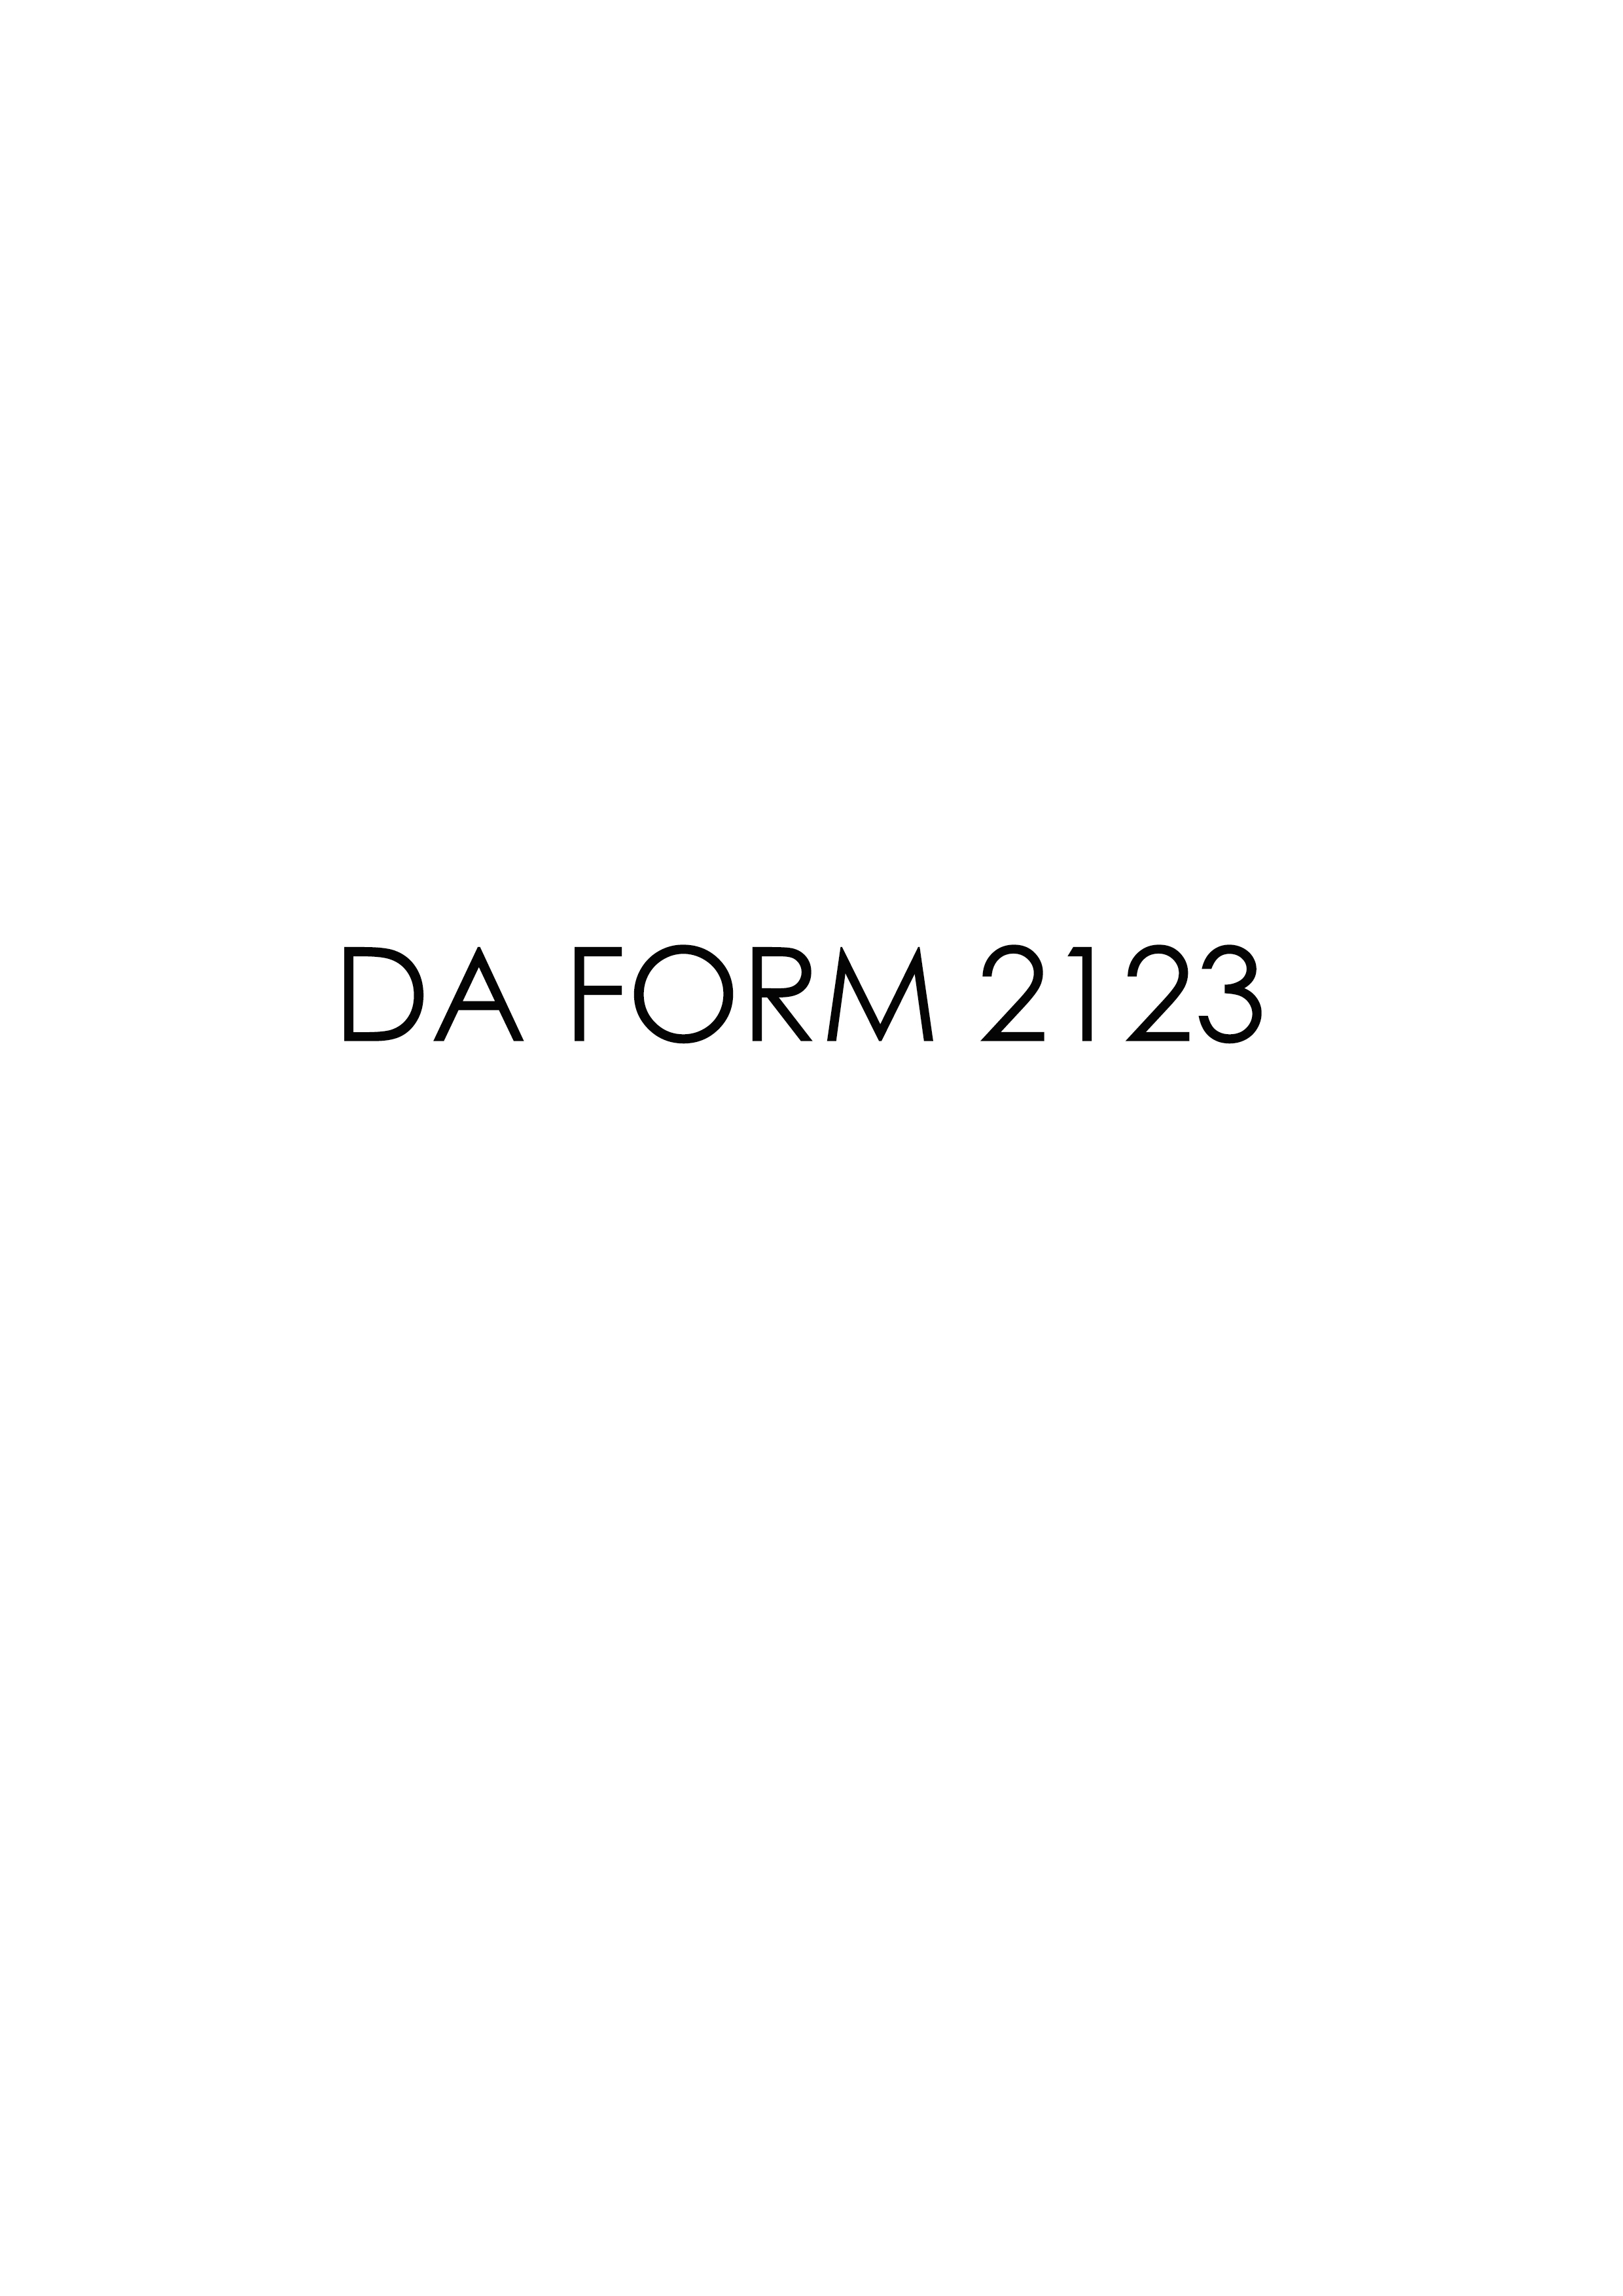 Download da 2123 Form